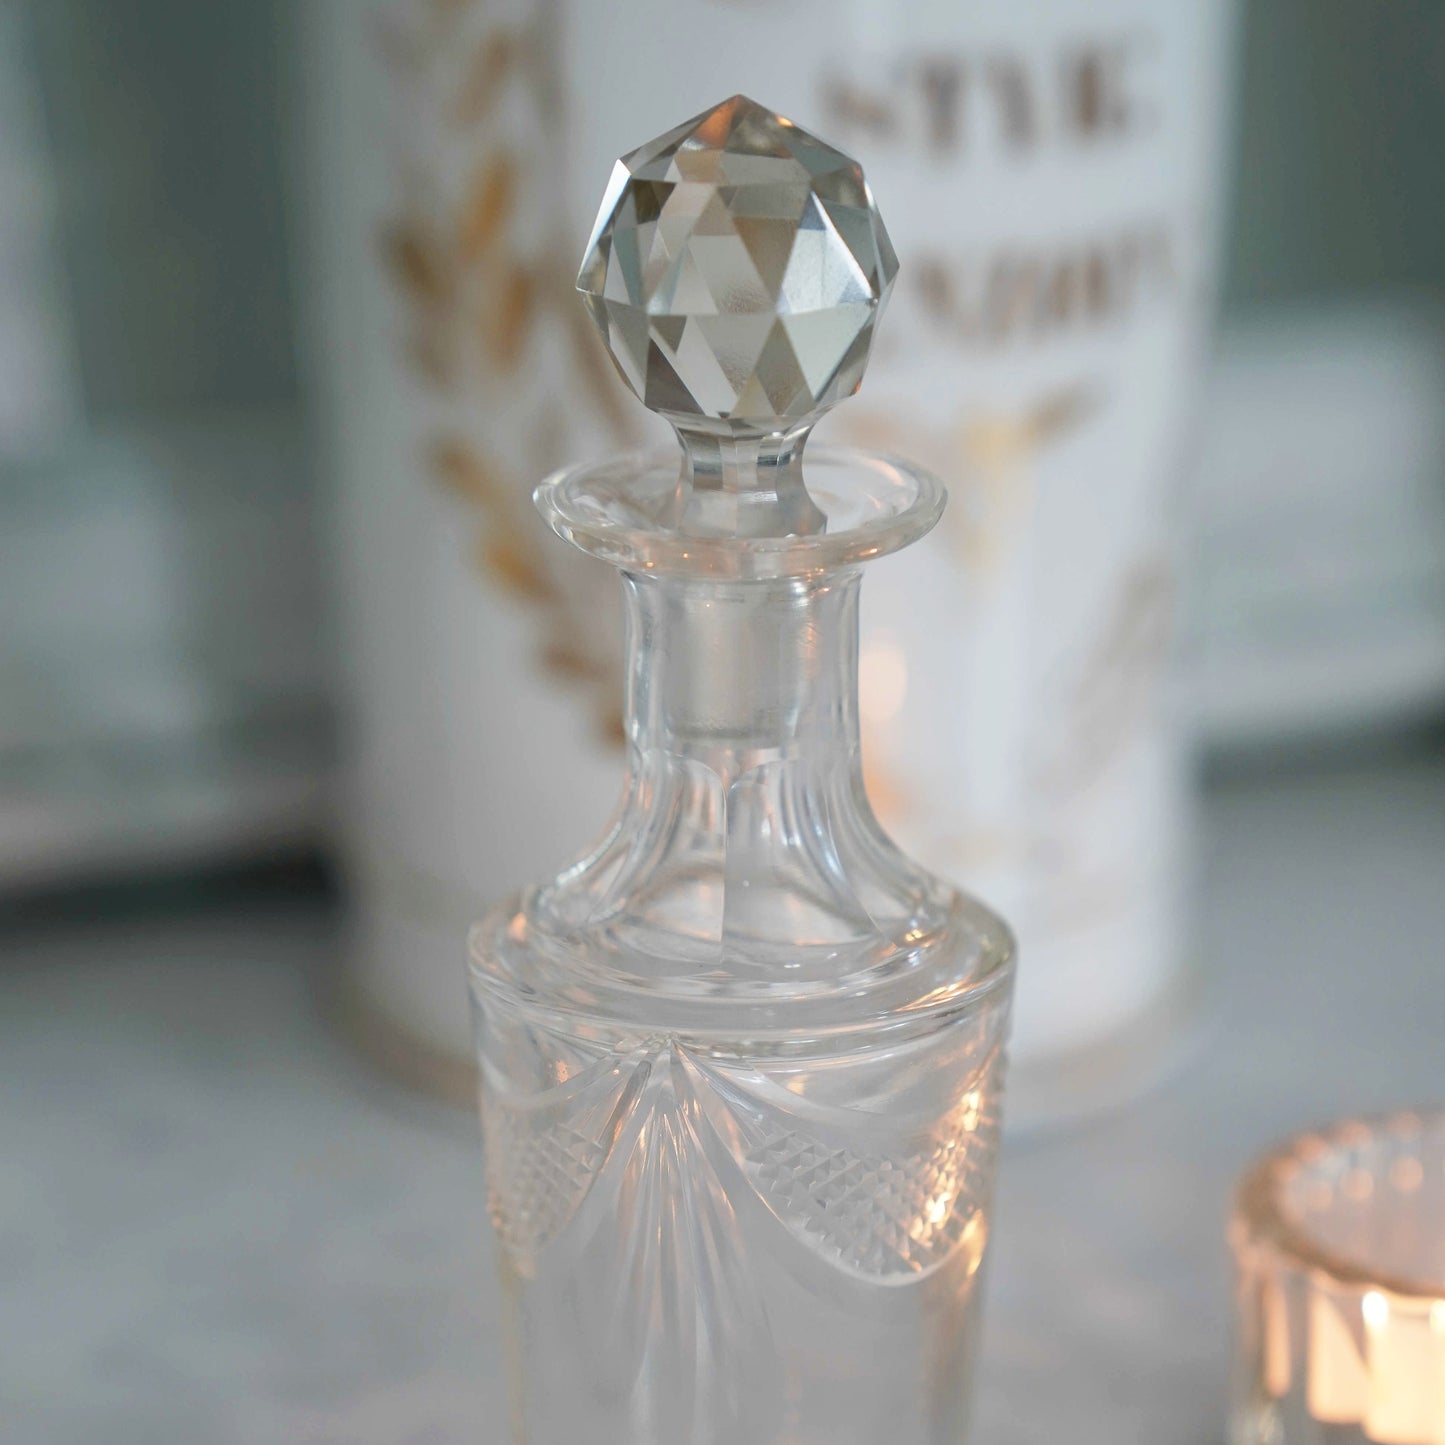 English antique Edwardian lady’s traveling vanity bottle with stopper